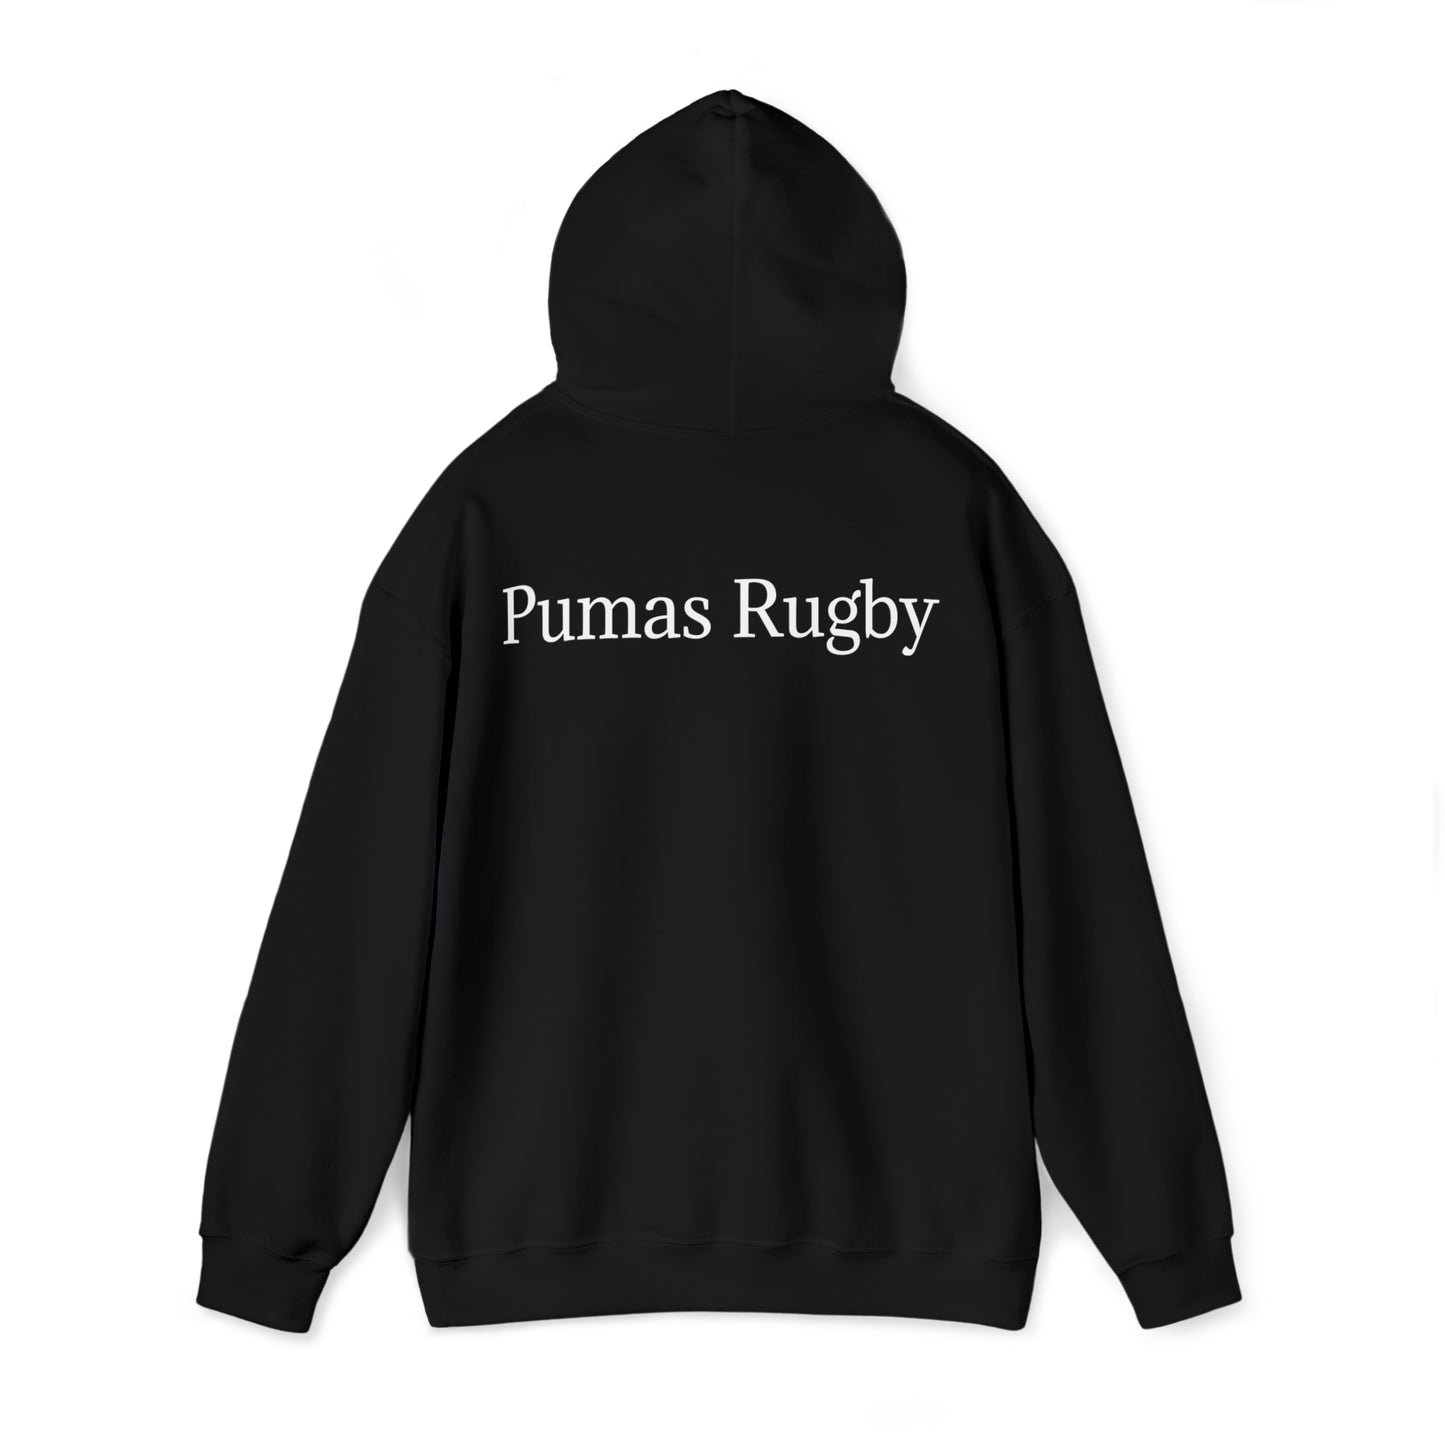 Pumas with RWC - black hoodie